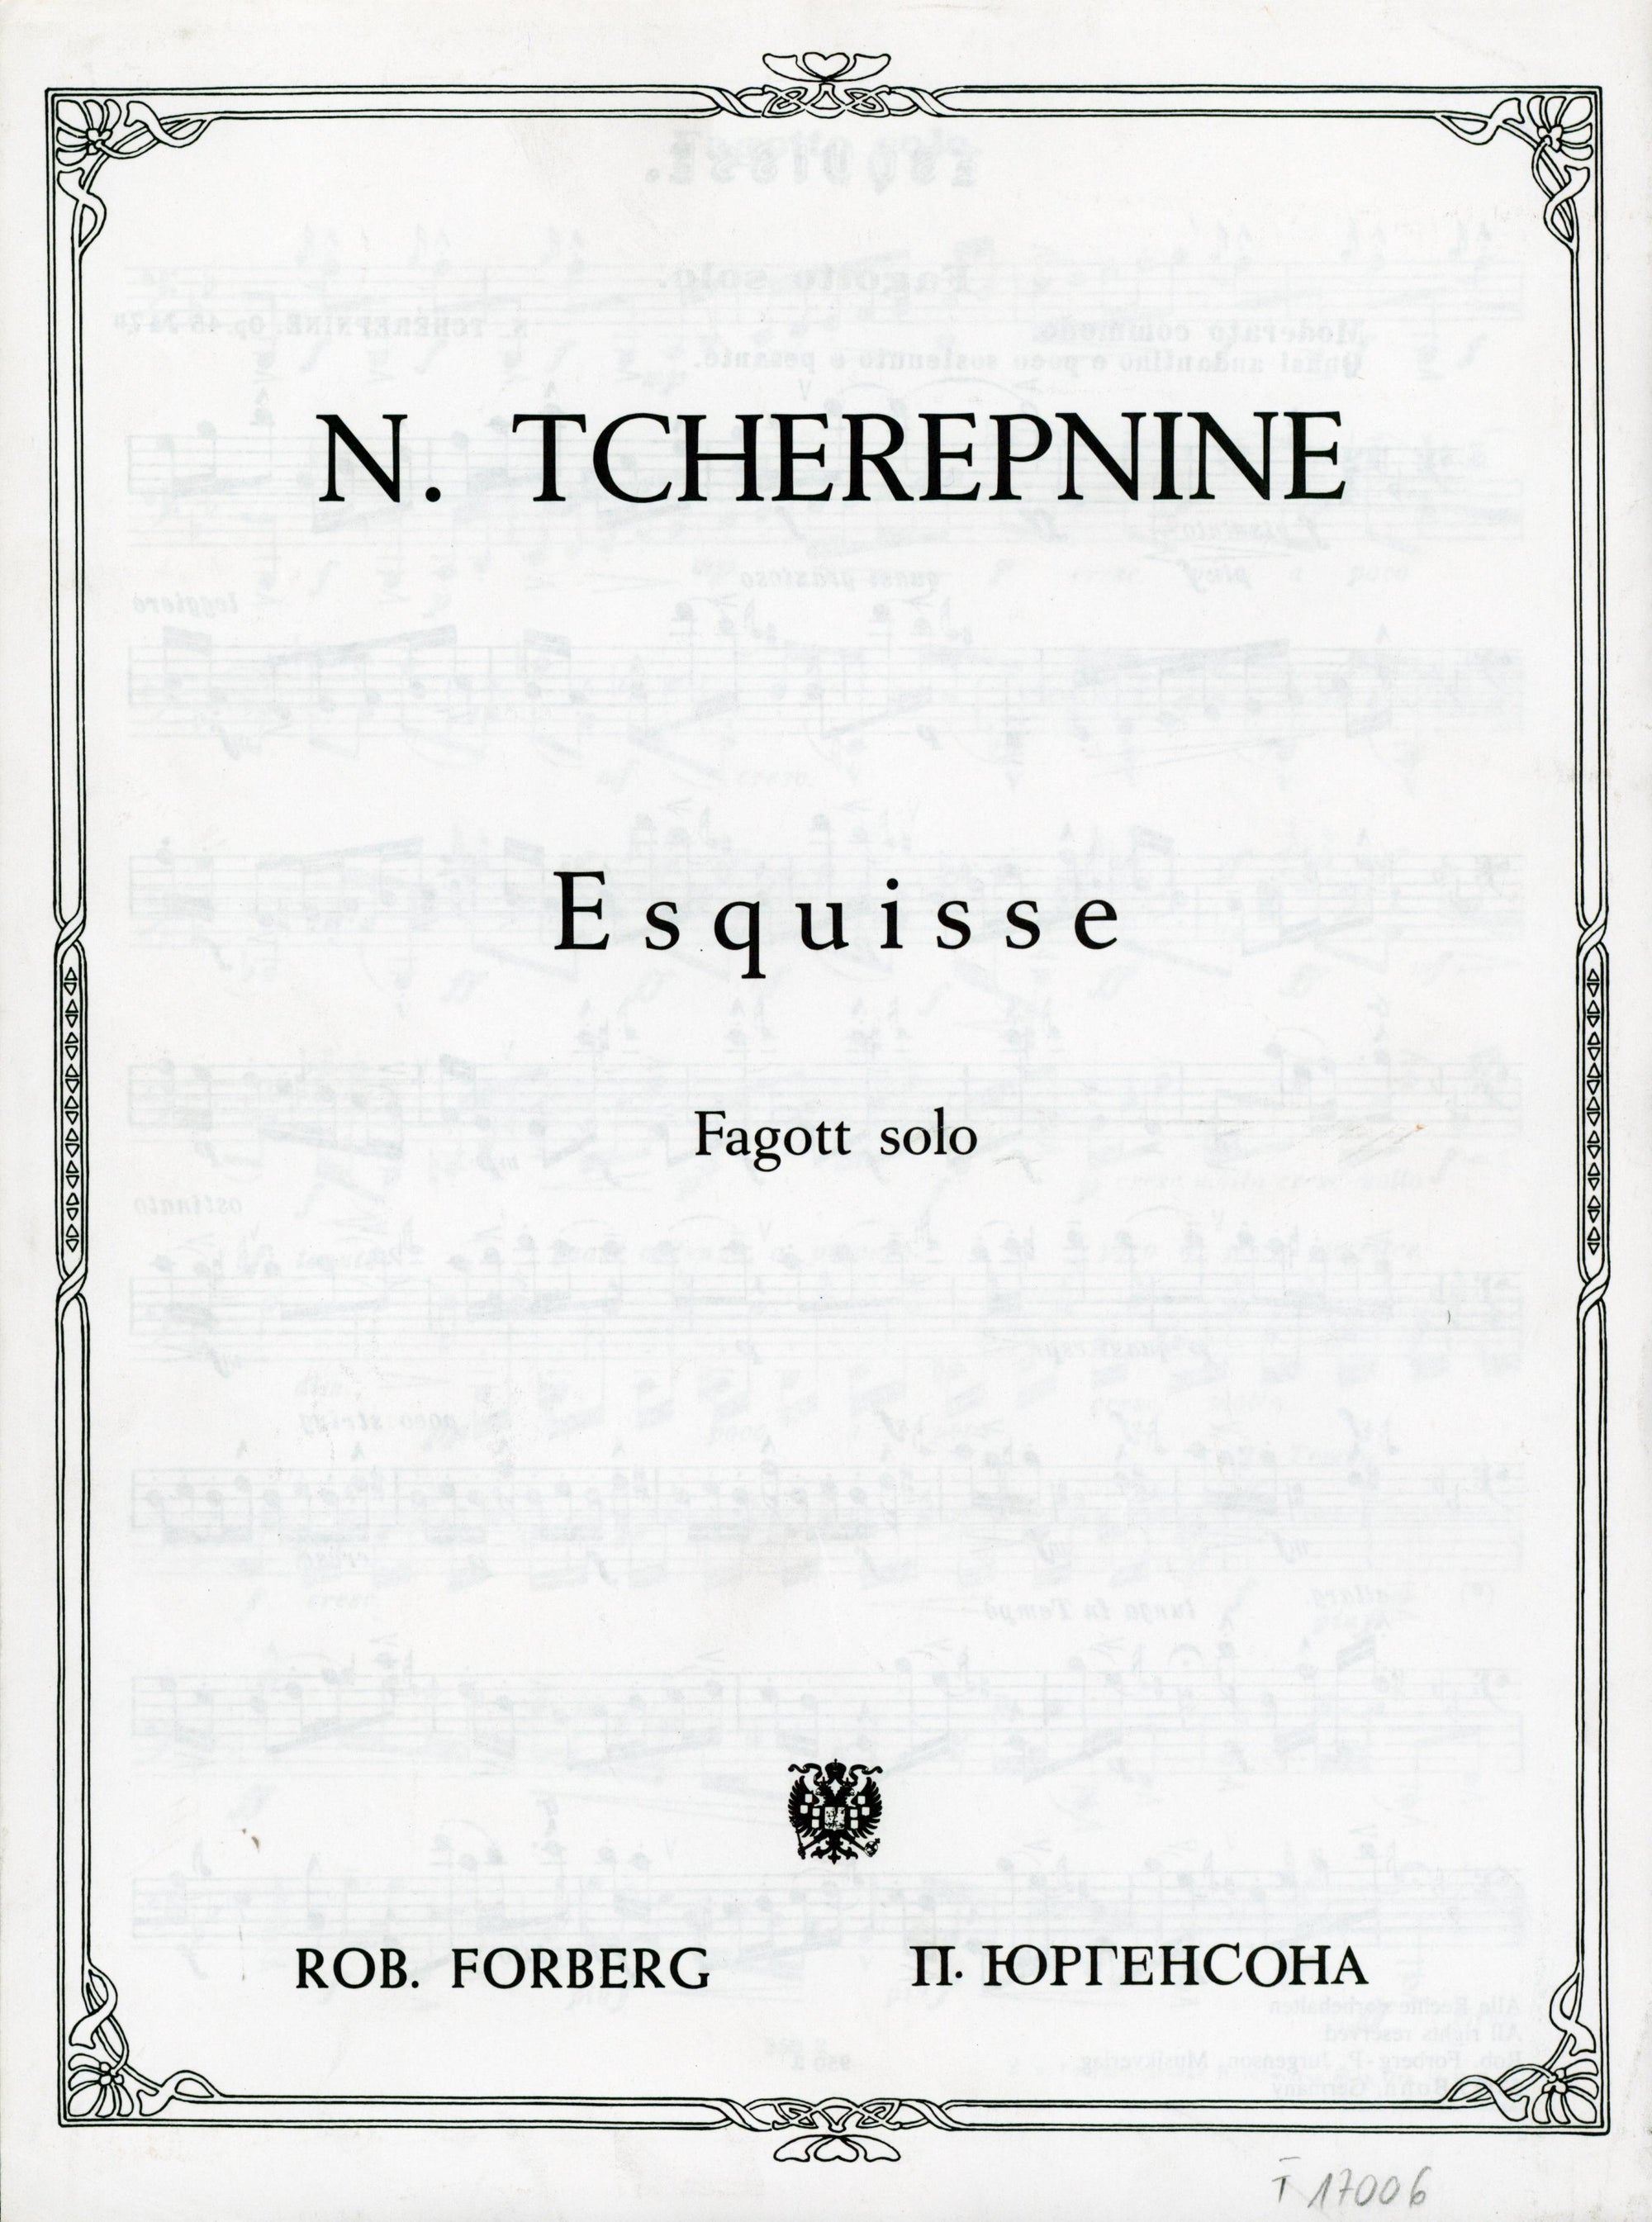 Tcherepnin: Esquisse, Op. 45, No. 7